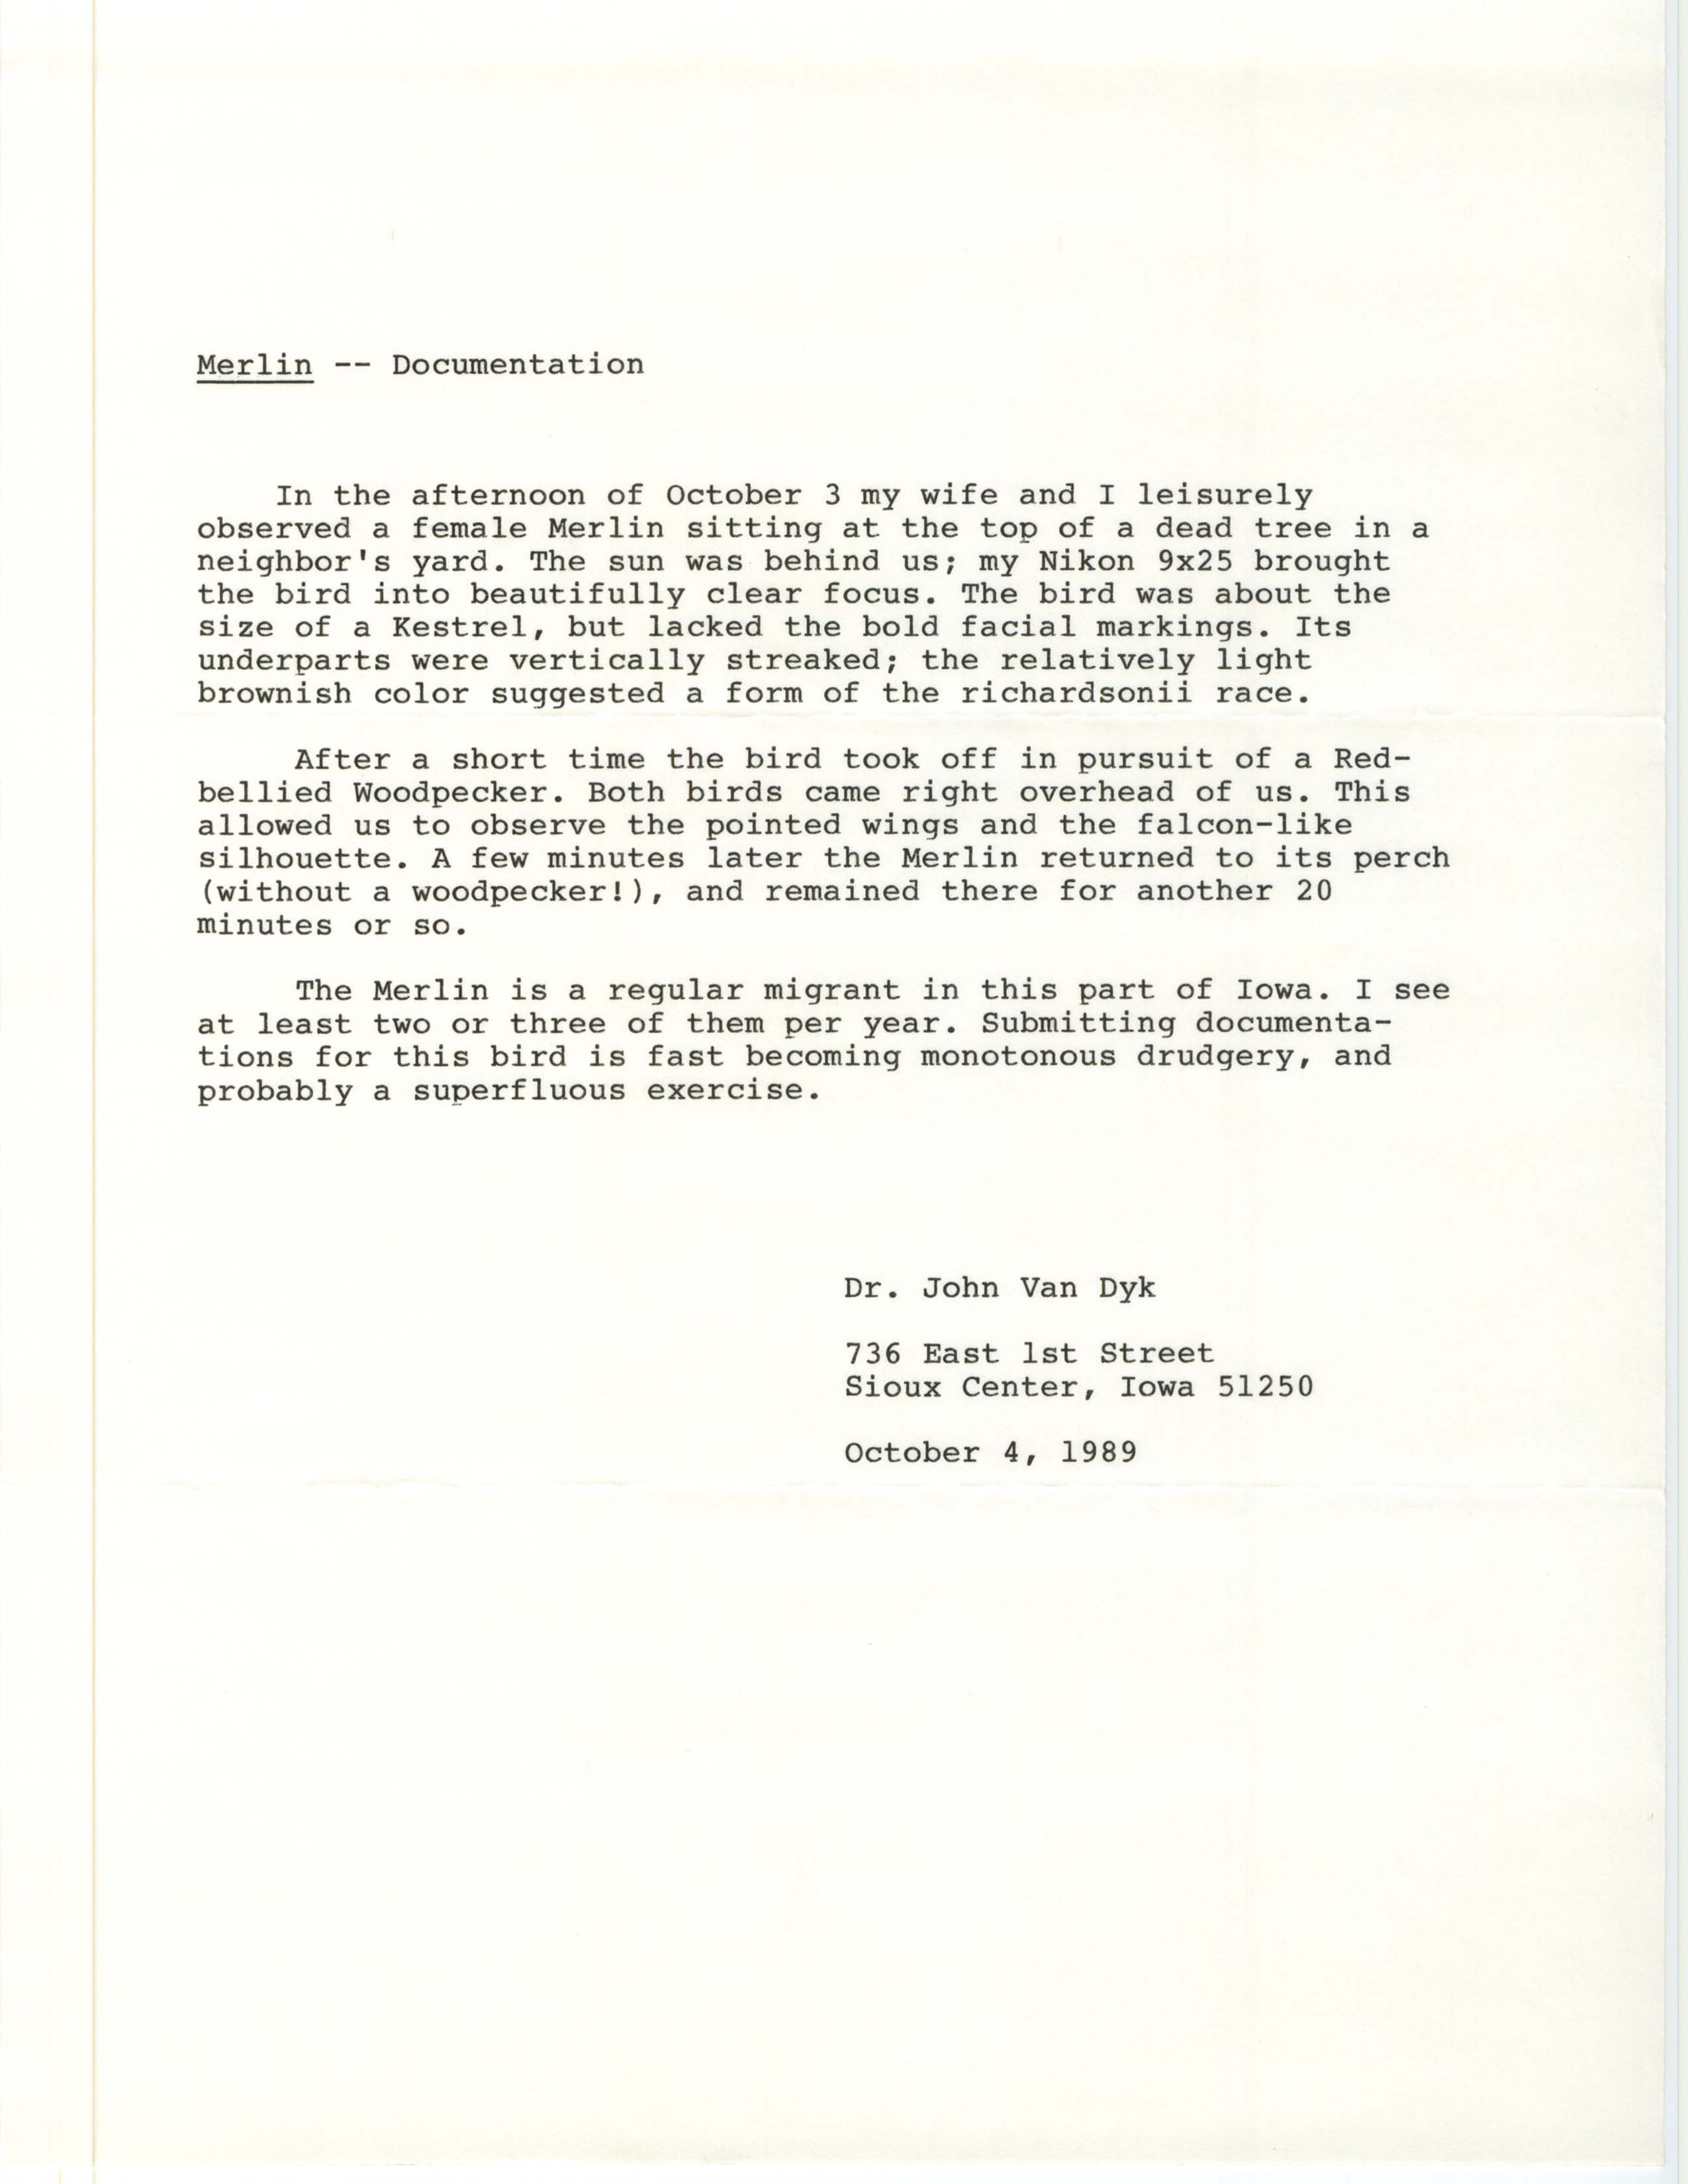 Rare bird documentation form for Merlin at Sioux Center, 1989